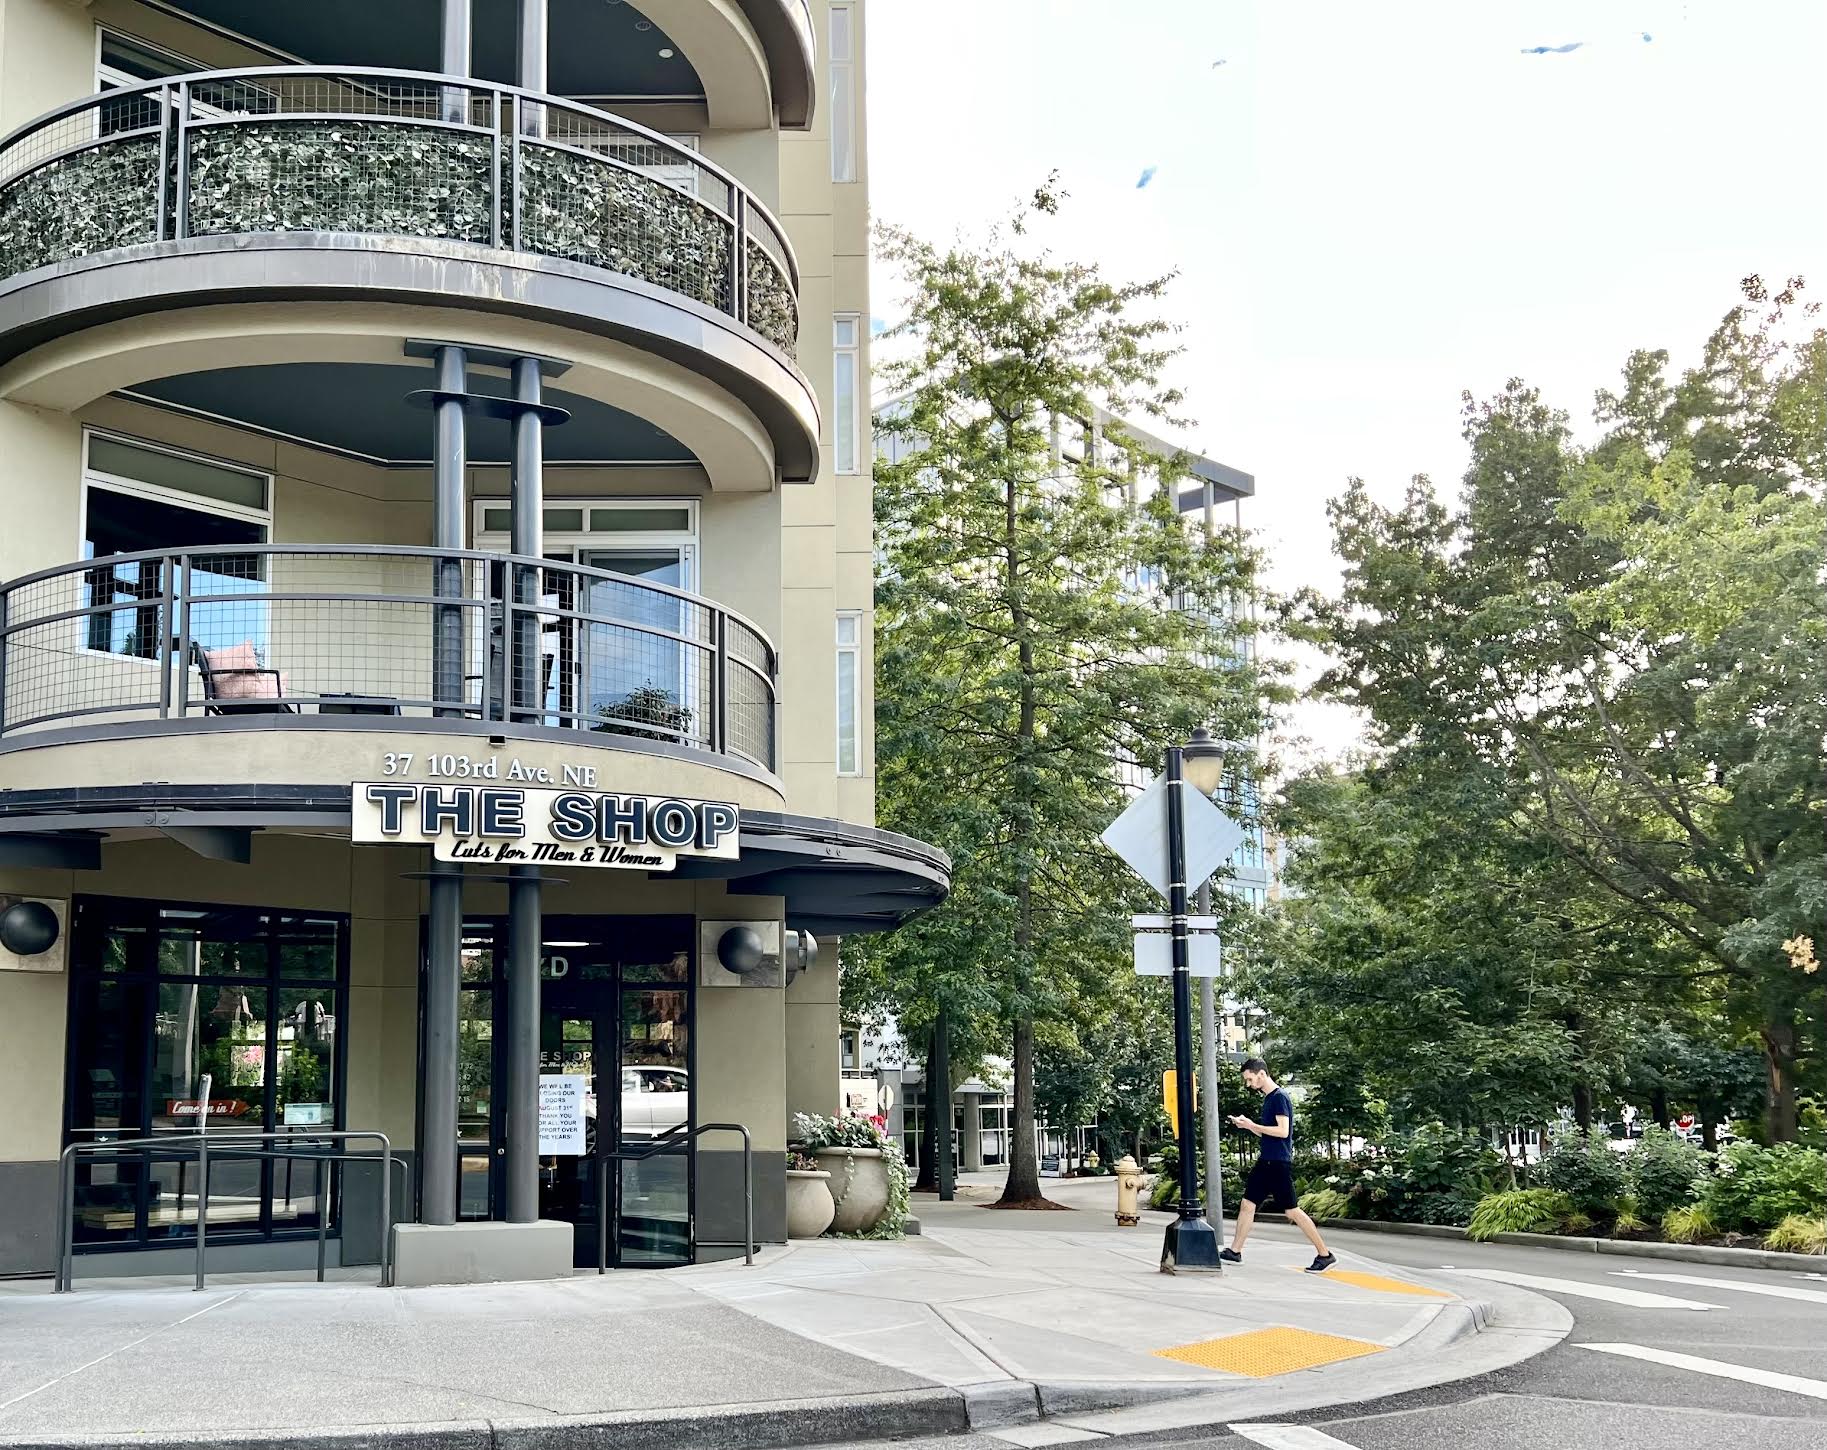 Hair Salon, The Shop, Now Closed in Bellevue | Downtown Bellevue Network